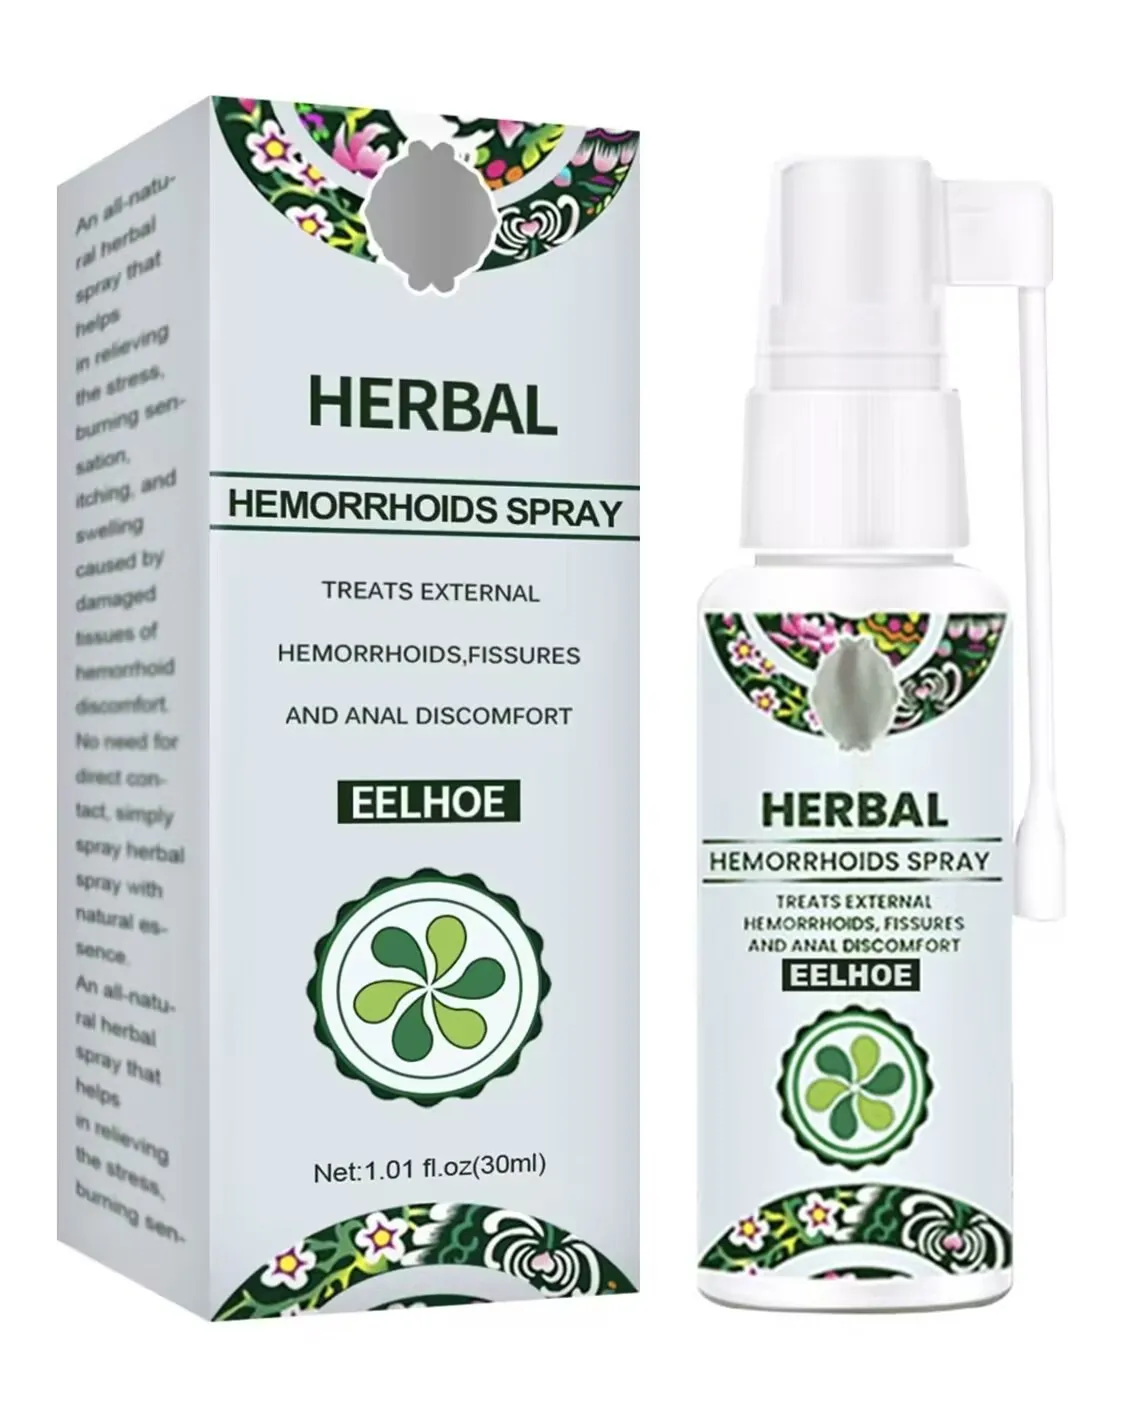 

30ml 100% Natural Herbal Hemorrhoids Spray Powerful Hemorrhoids Treatment Agent Relieve Anal Pain Hemorrhoids Spray